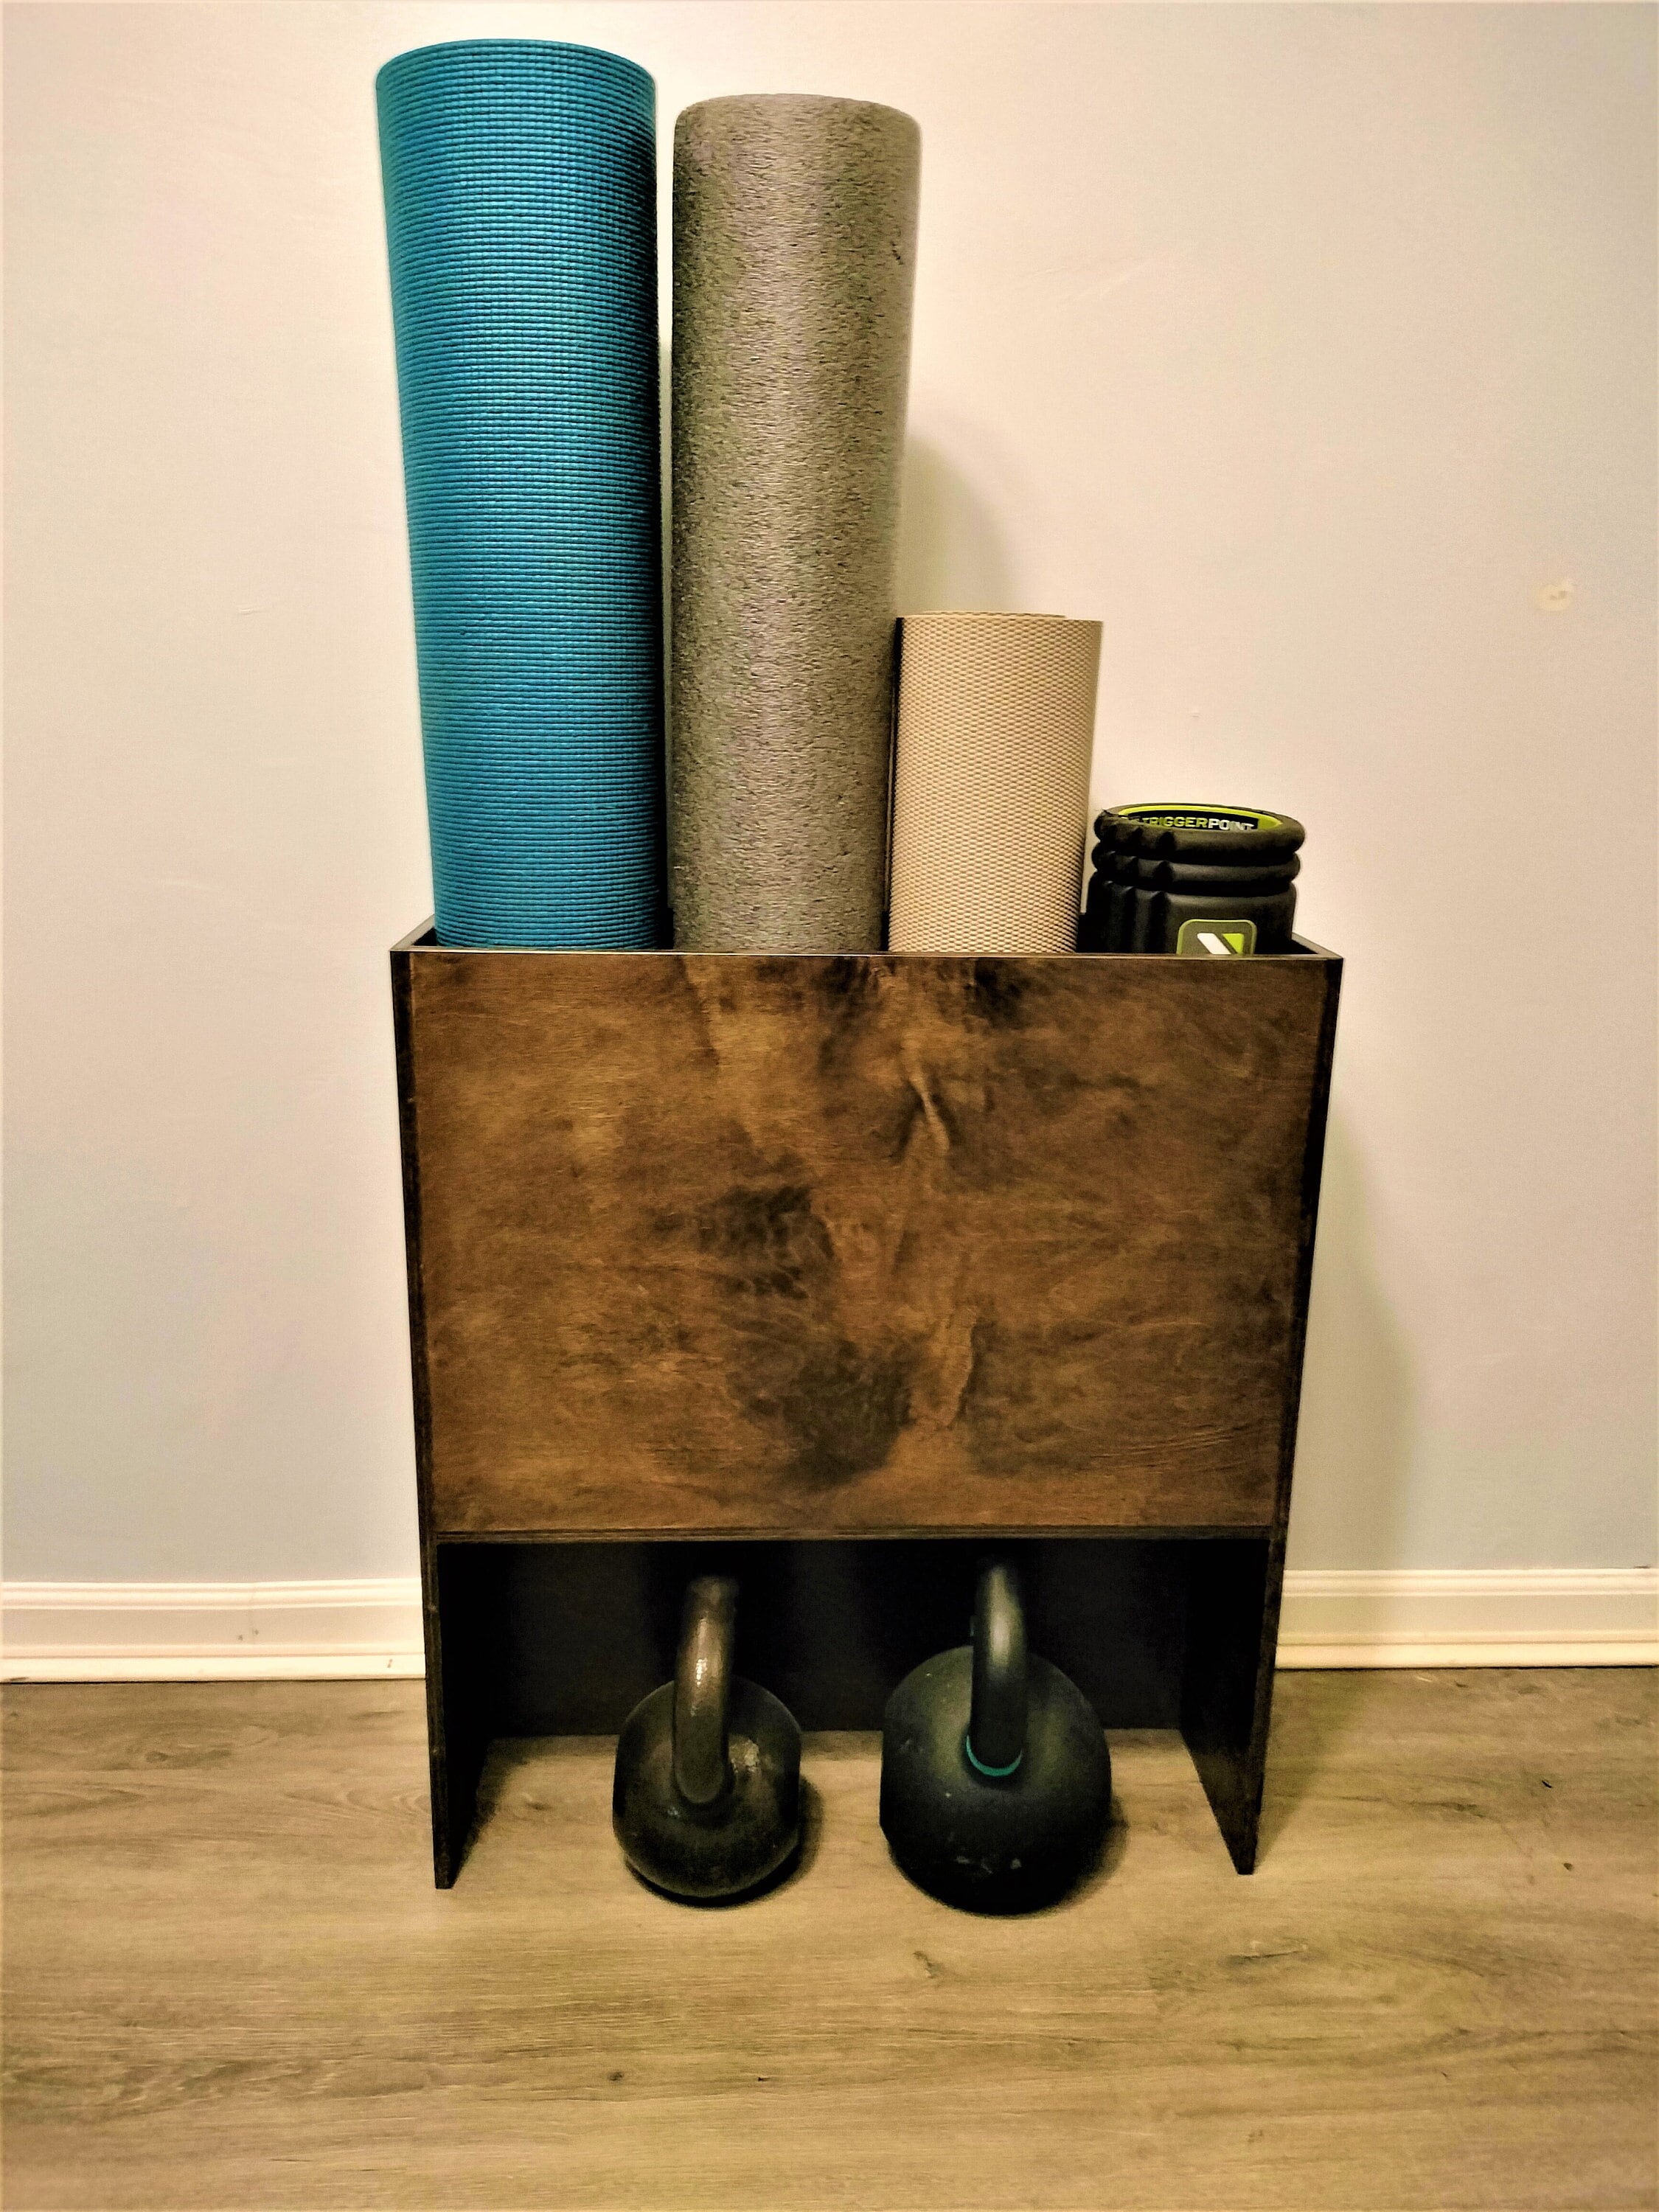 1pc Yoga Mat Storage Basket, Yoga Mat Storage Rack, Home Gym